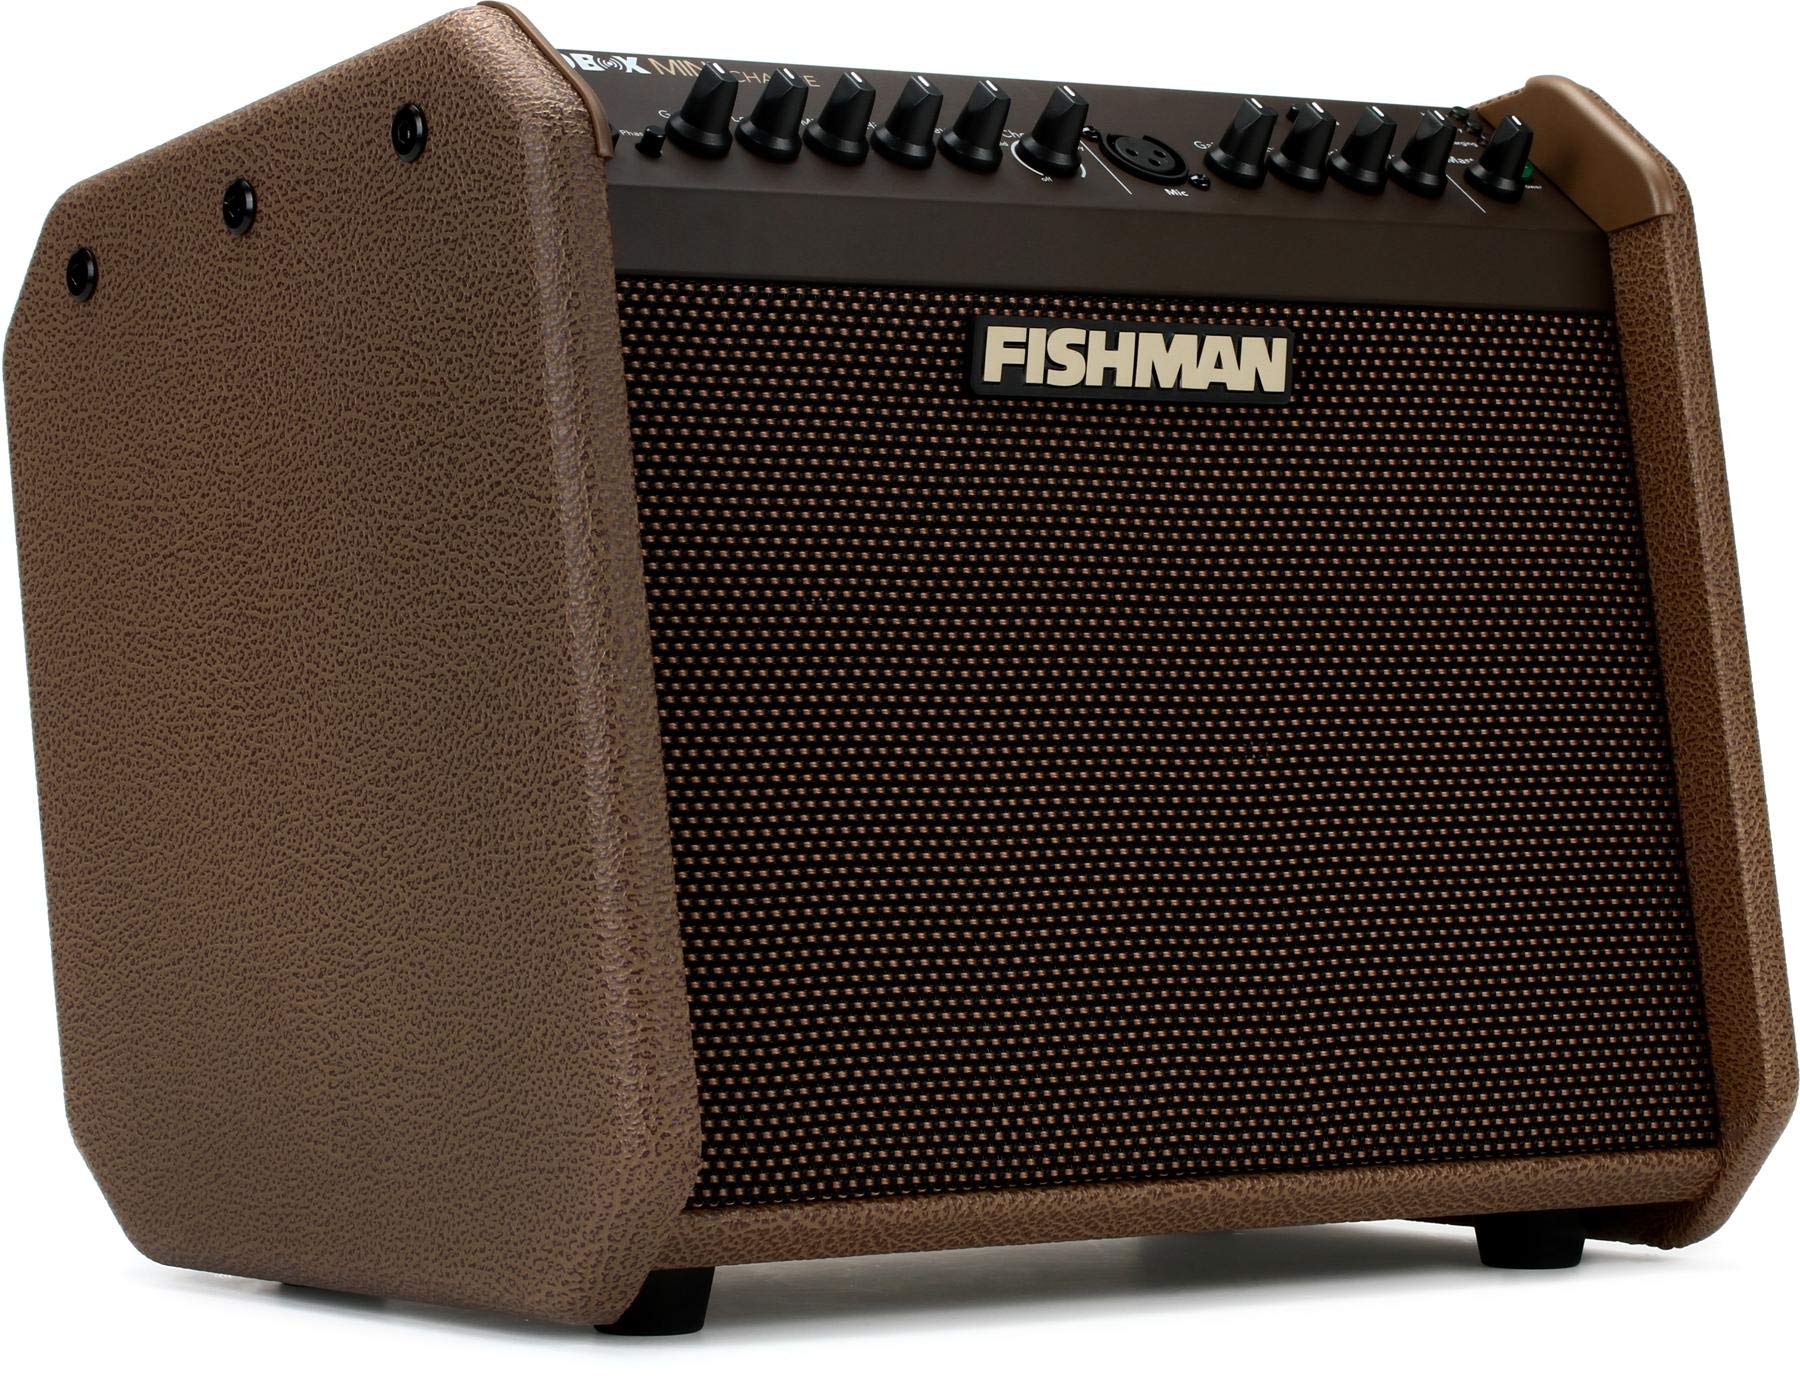 Fishman लाउडबॉक्स मिनी चार्ज 60-वाट 1x6.5 इंच बैटरी चालित ध्वनिक कॉम्बो एम्प